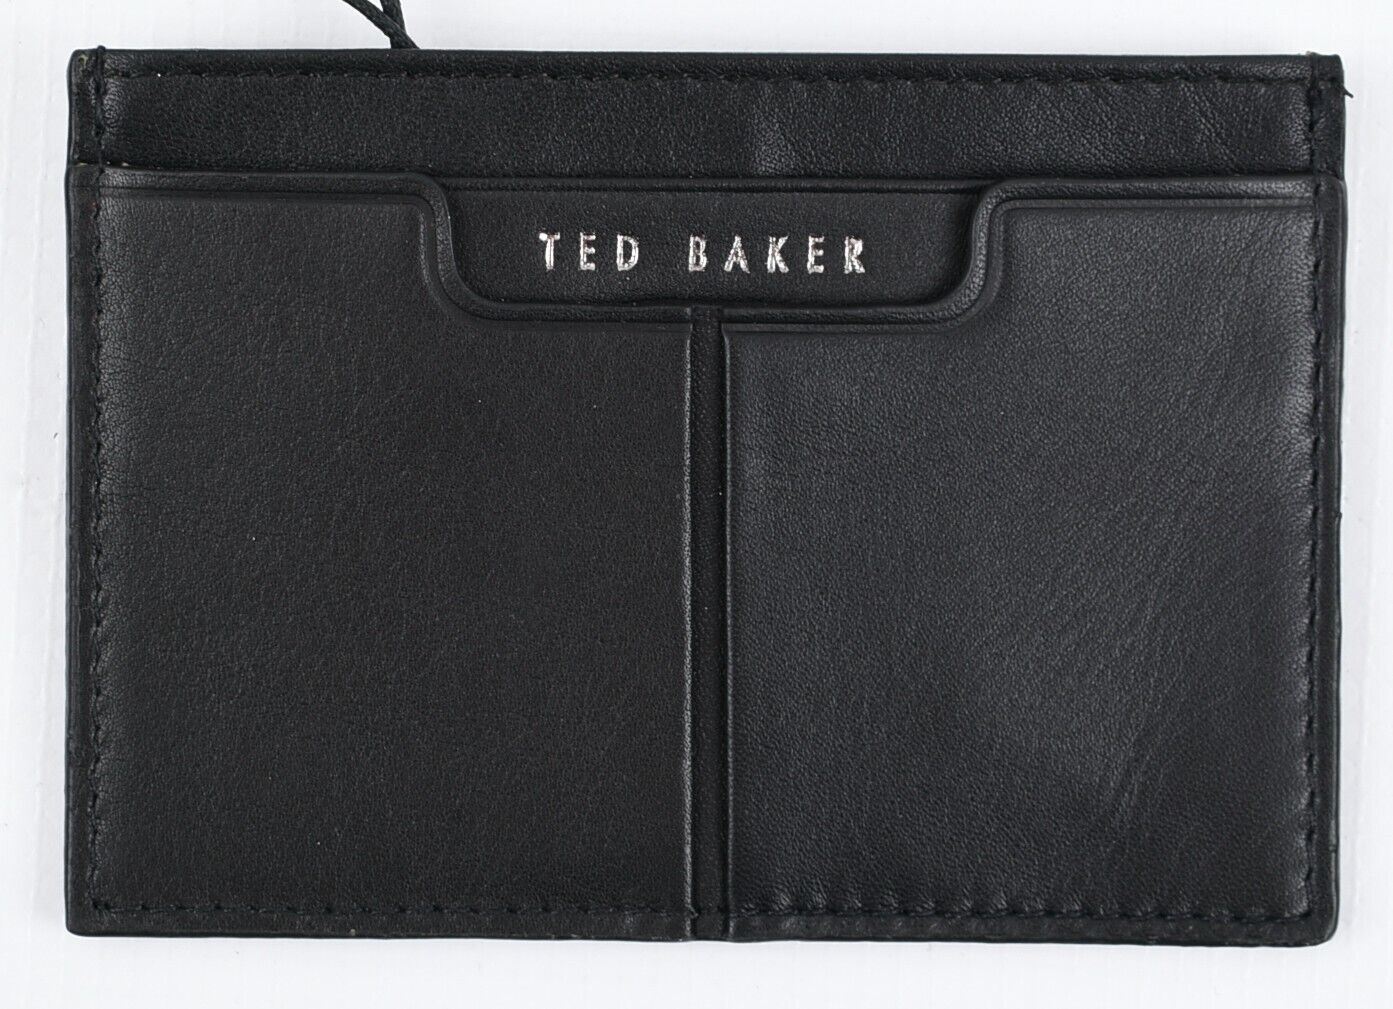 TED BAKER - SAMISE Genuine Leather Card Holder, RFID Blocking, Black, Gift Boxed